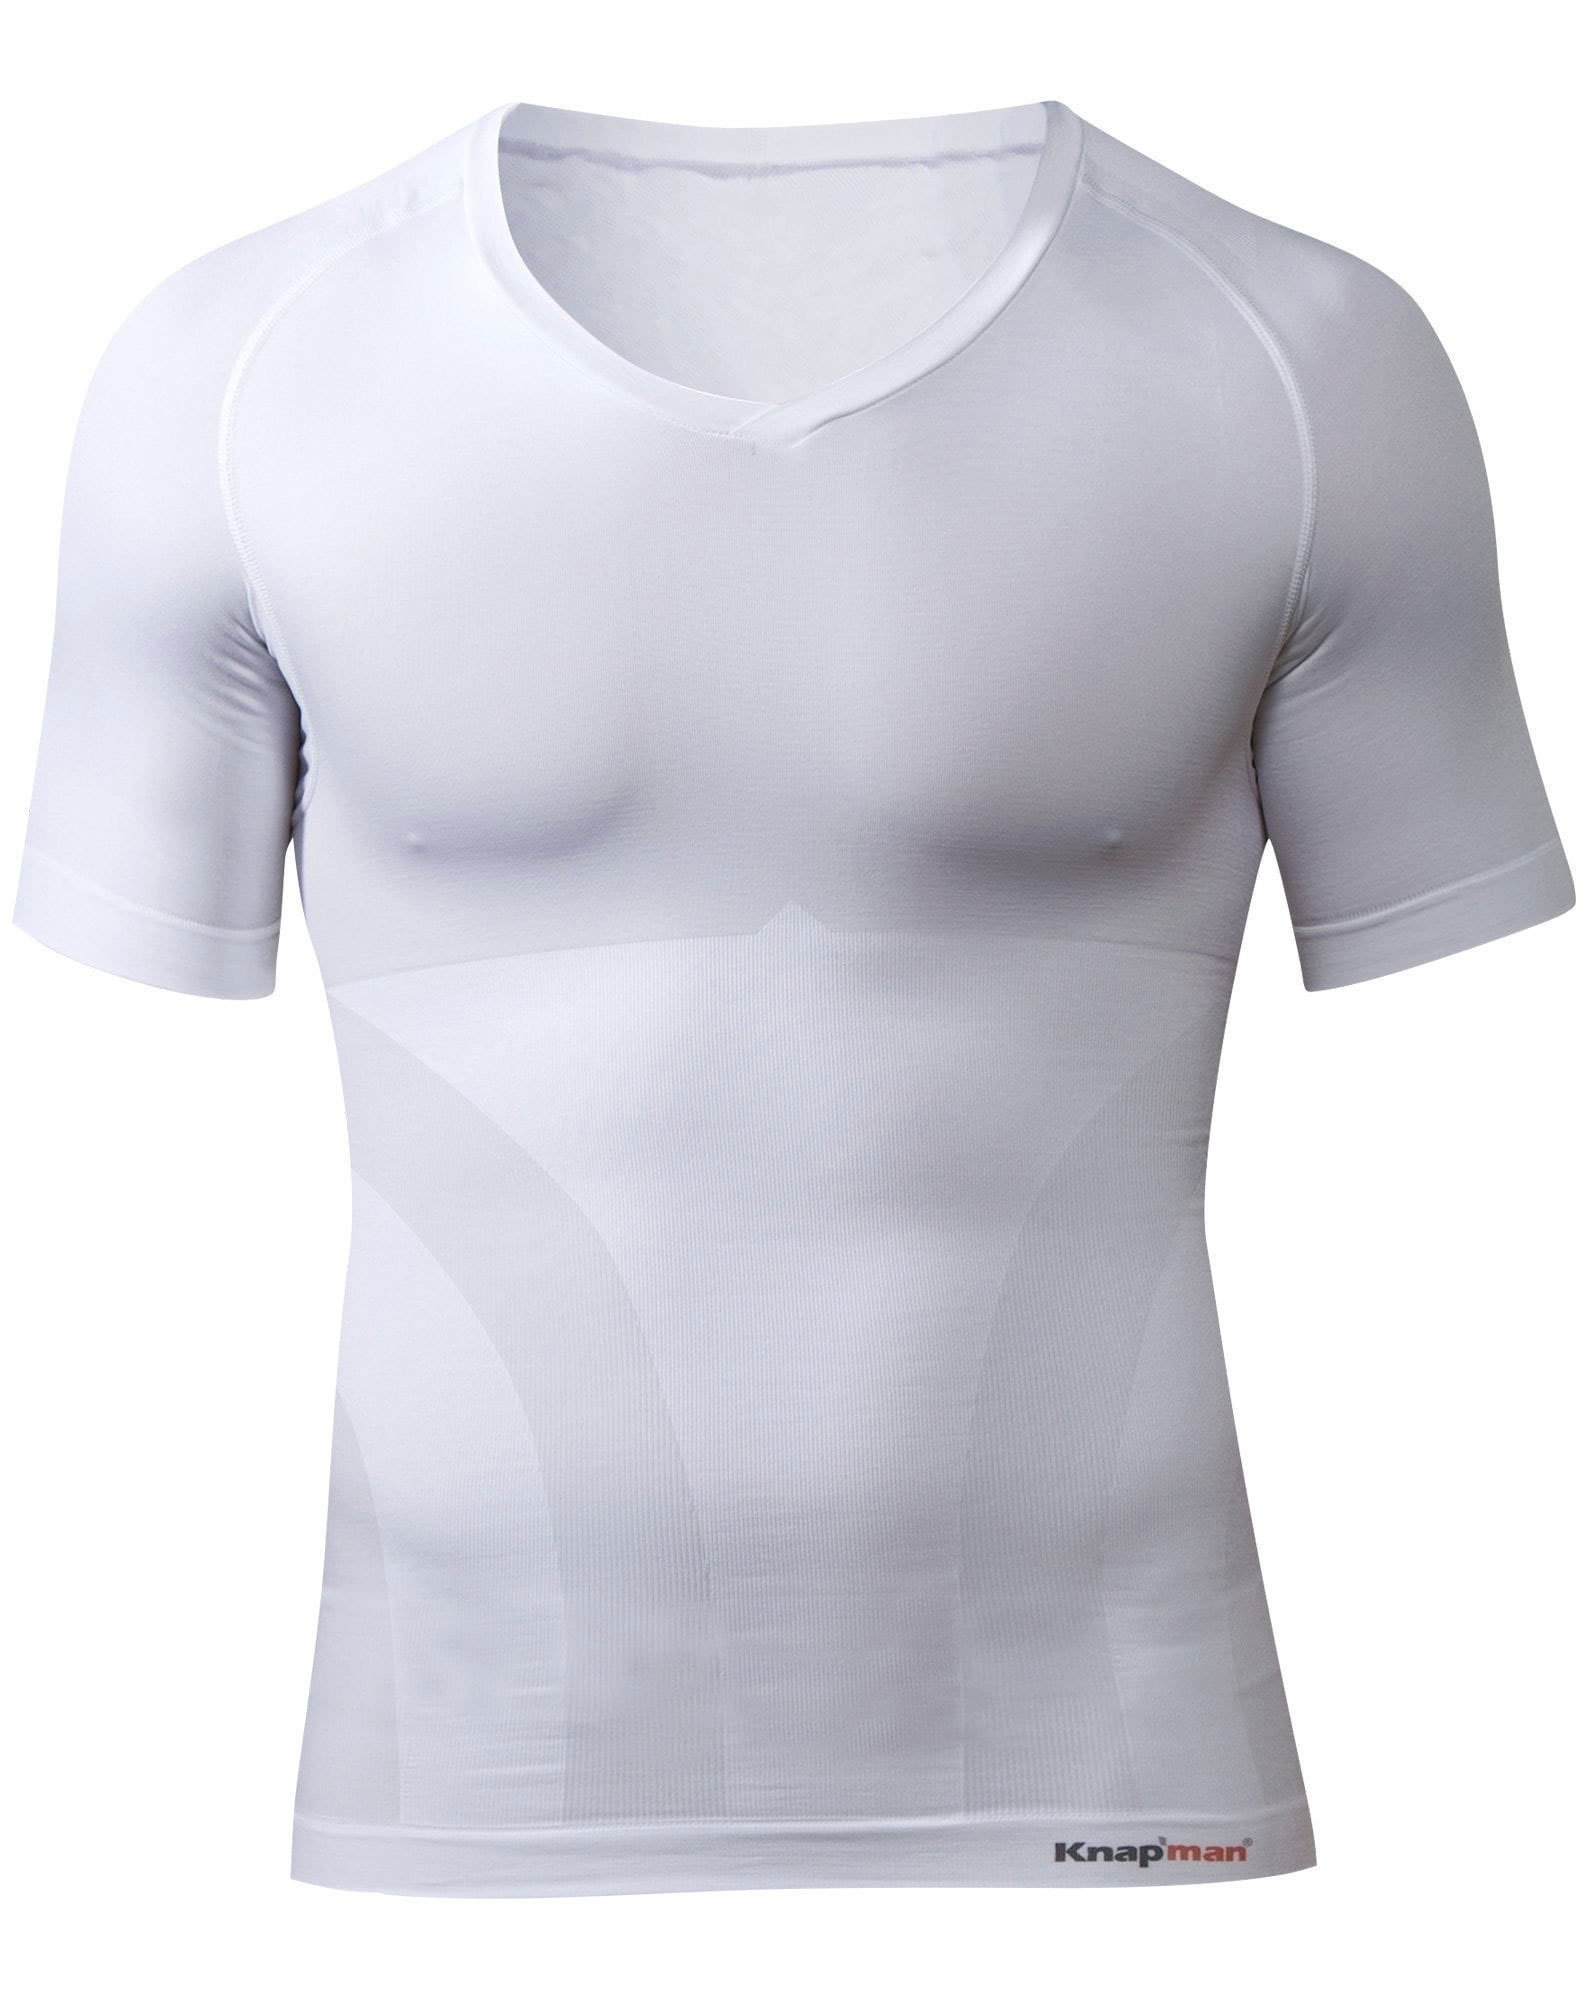 dempen avond nog een keer Knap'man | Online Shop | Knap'man Zoned Cotton Comfort V-hals shirt wit